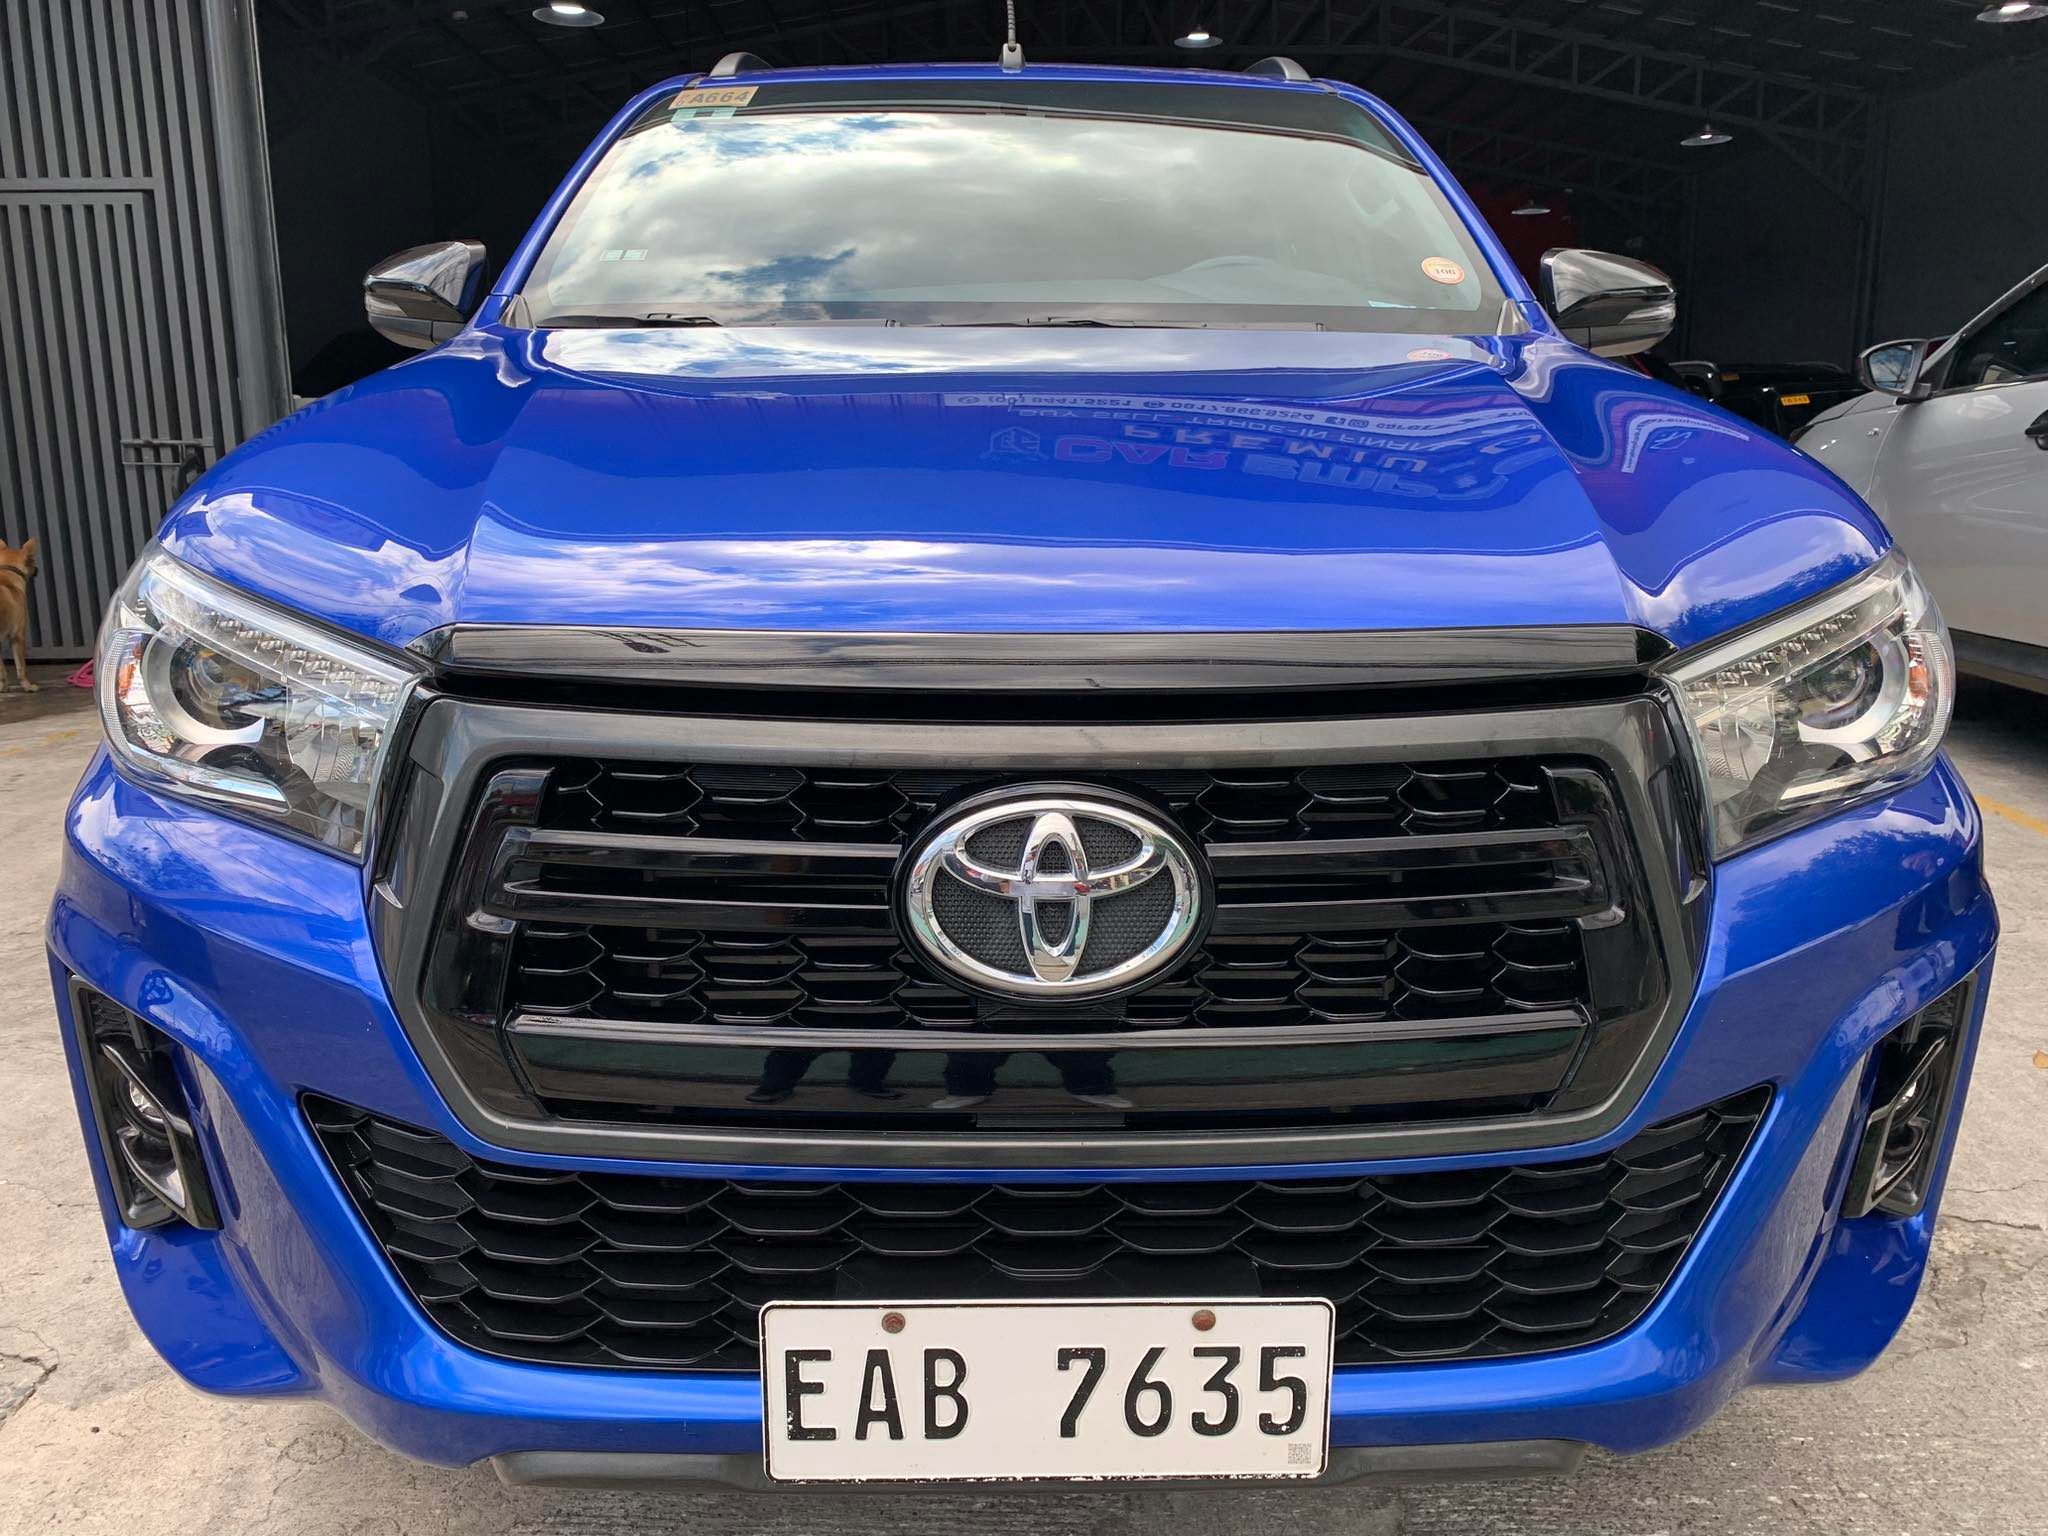 2019 Toyota Hilux